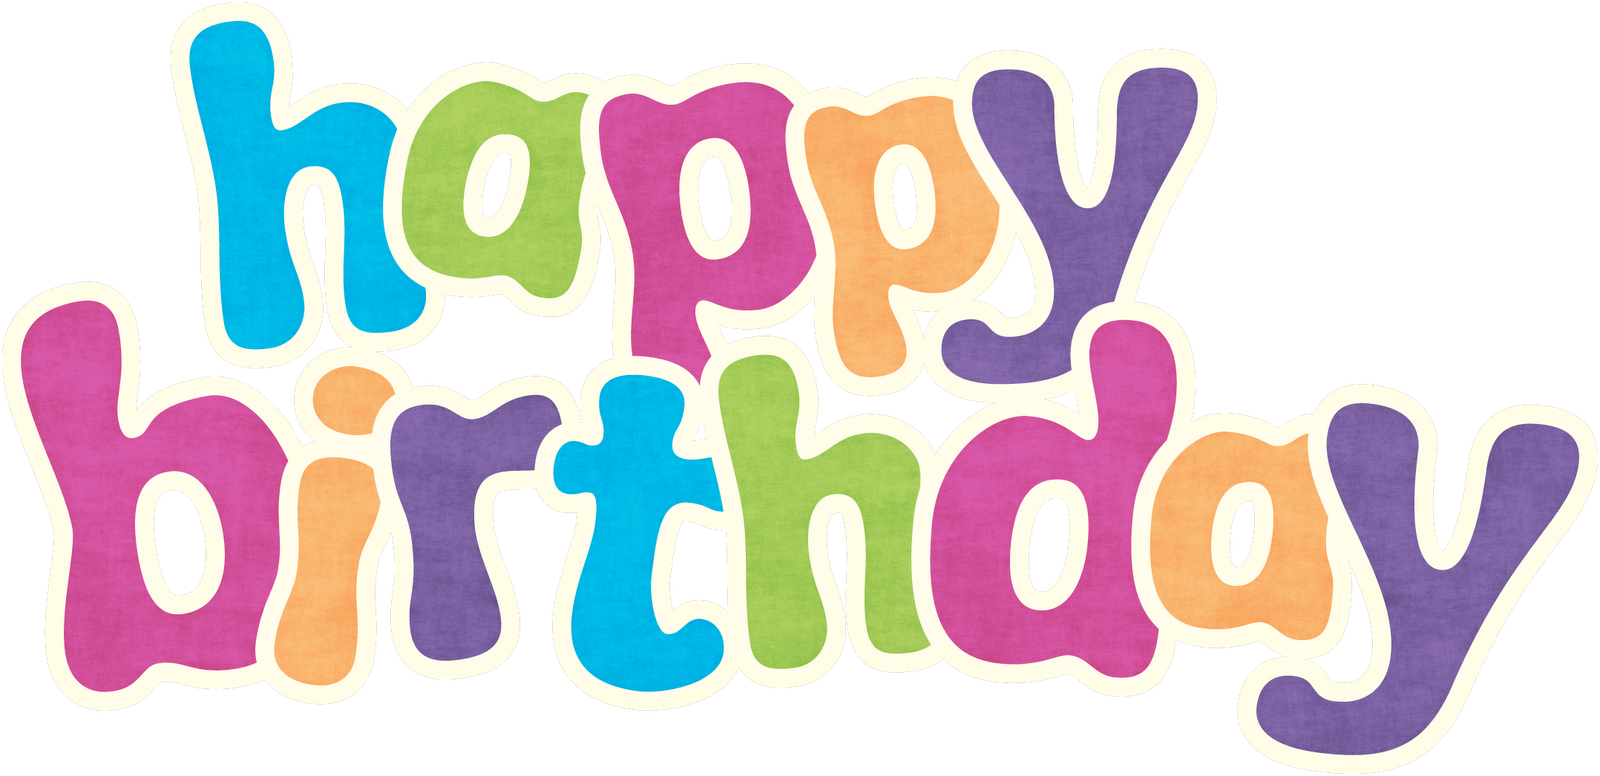 Alles Gute zum Geburtstag PNG HD